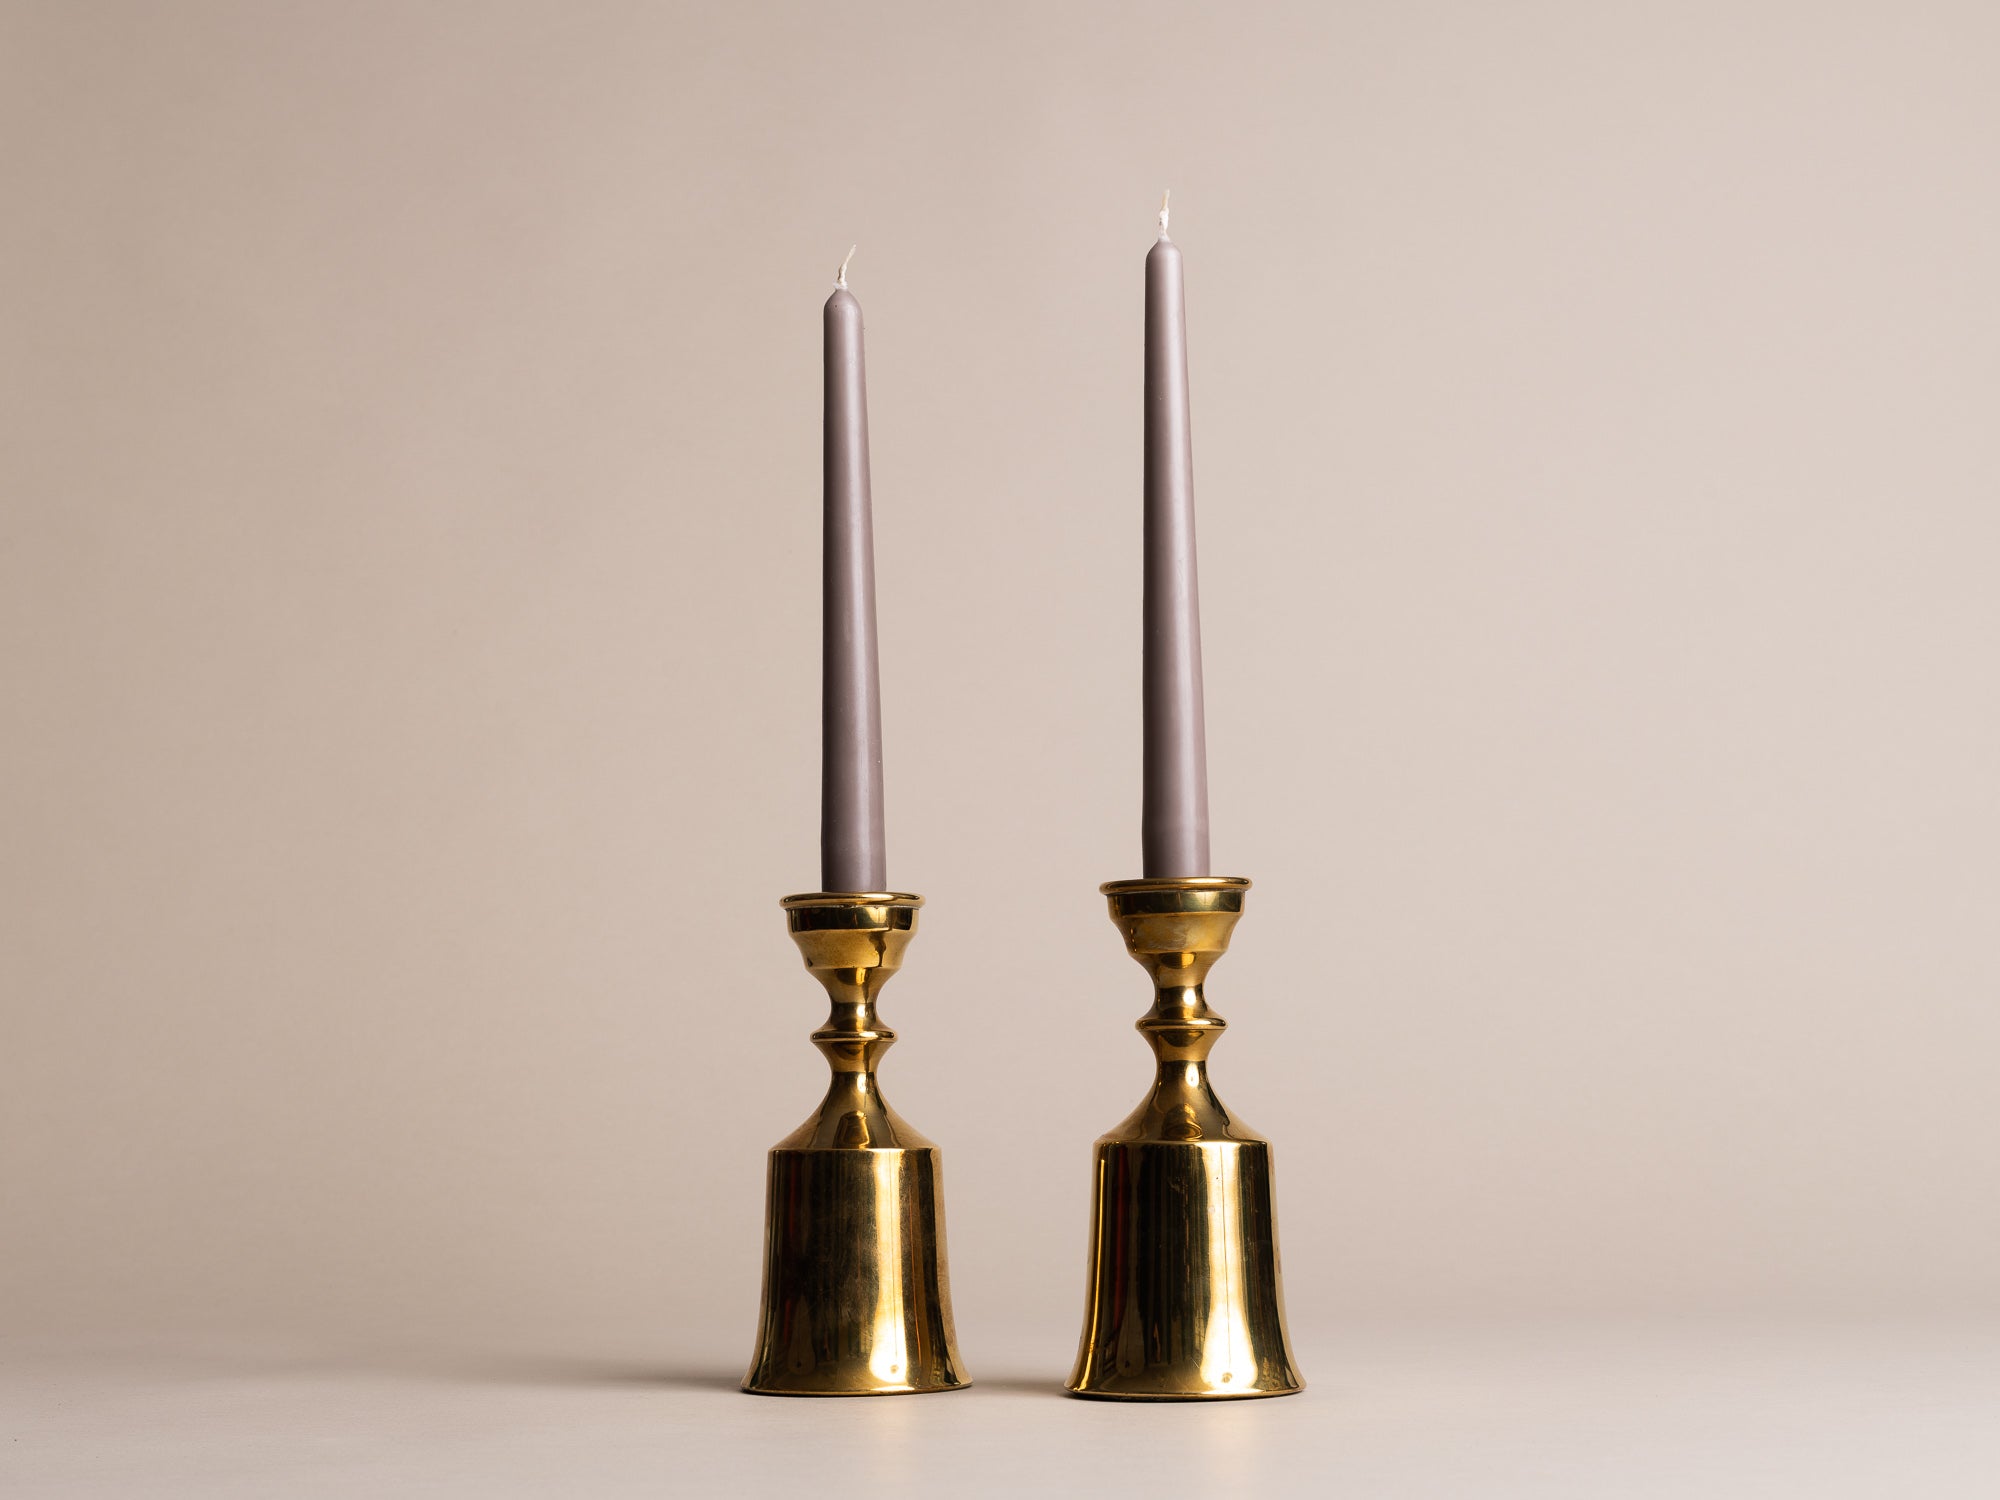 Paire de flambeaux modernistes par Boyes Metalkunst, Danemark (vers 1950)..Set of 2 modernist Candle holders by Boyes Metalkunst, Denmark (circa 1950)